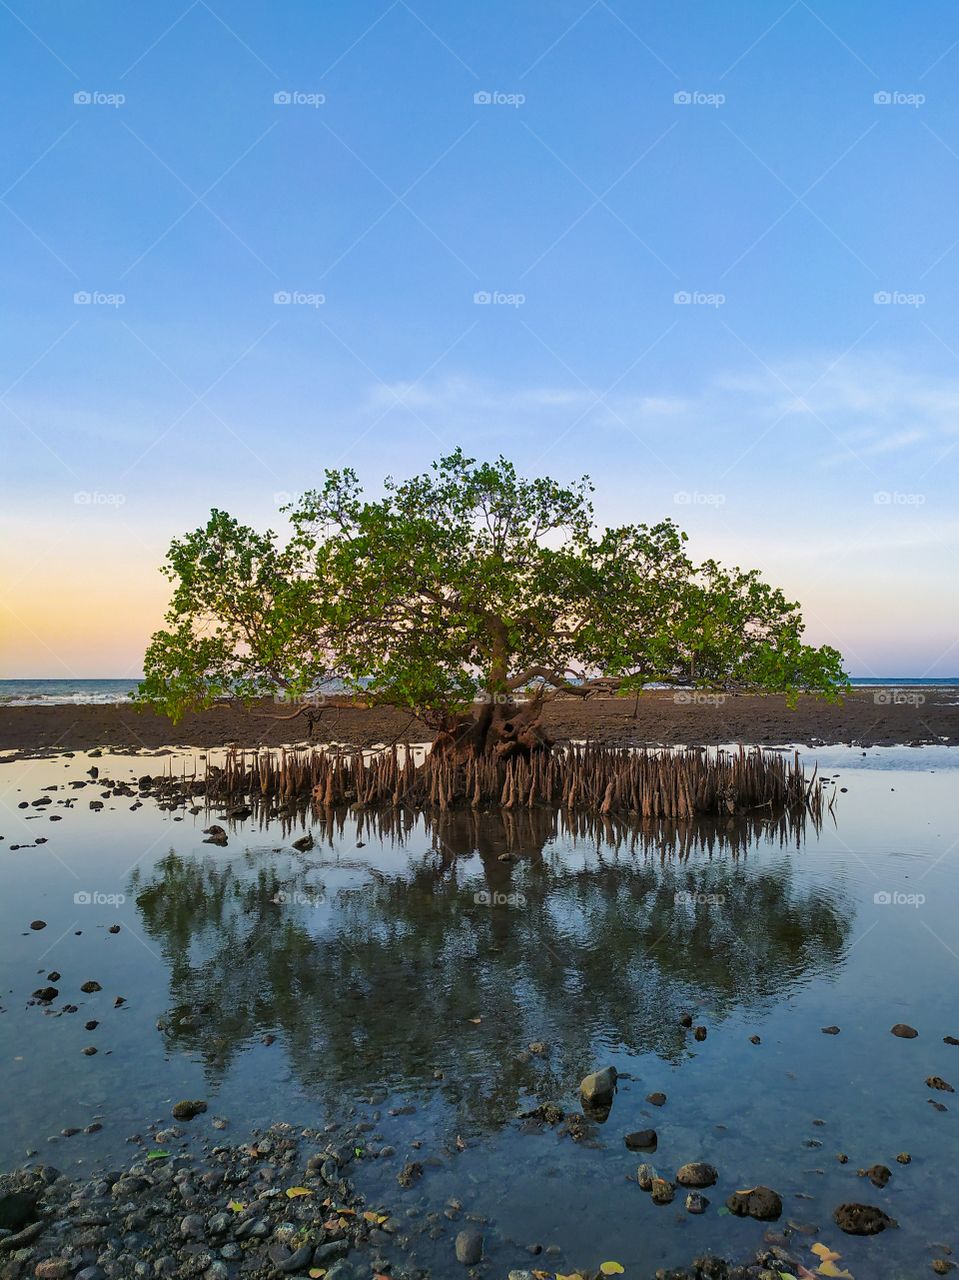 mangrove trees around the coast of Banyuglugur, Indonesia